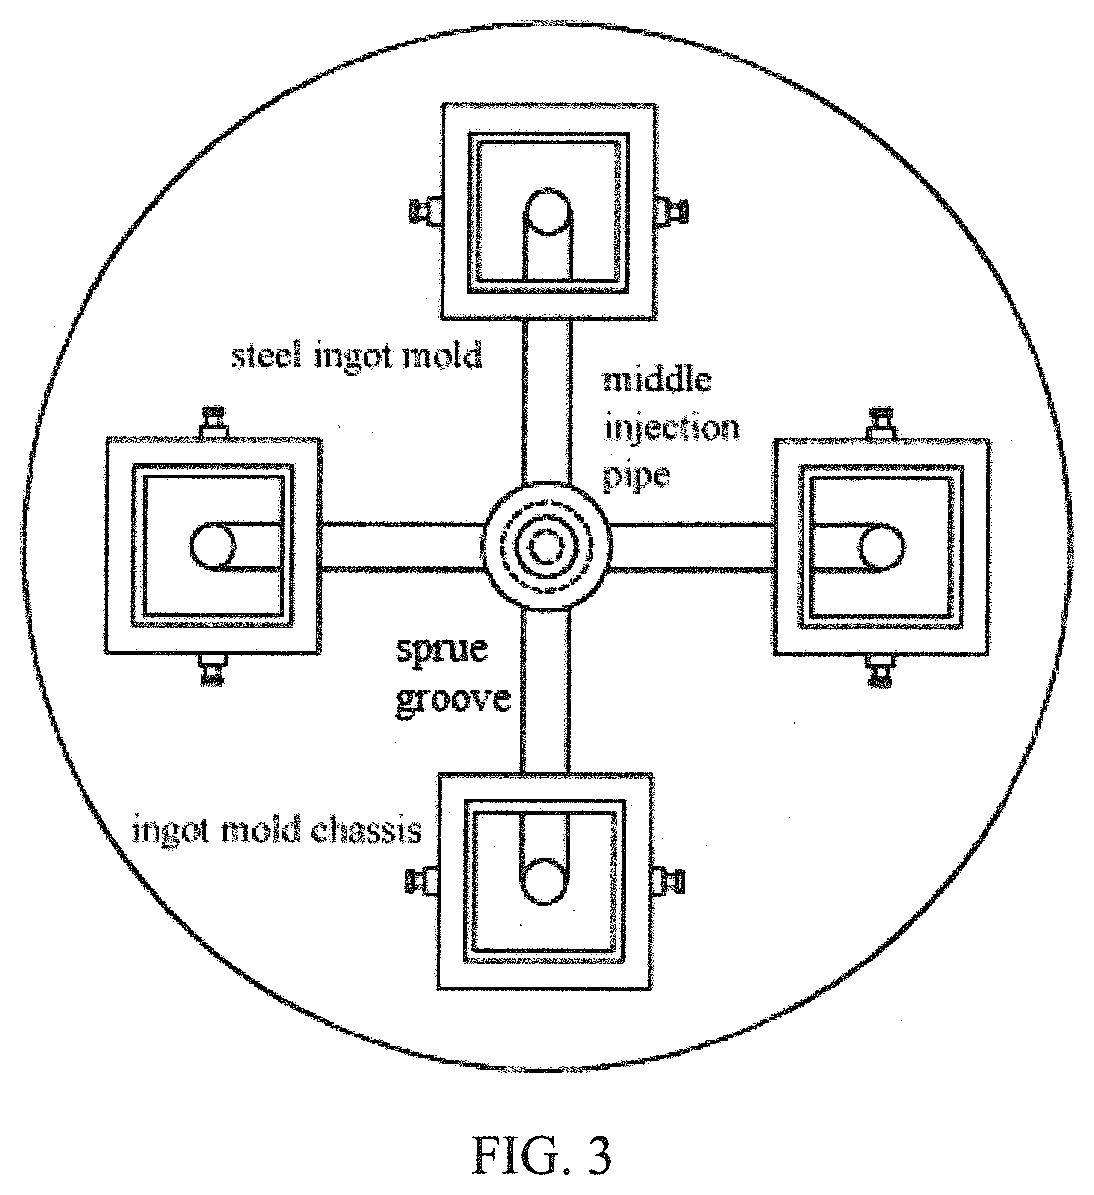 Method for produing high nitrogen steel by duplex melting process of pressurized ladle refining and pressurized electroslag remelting